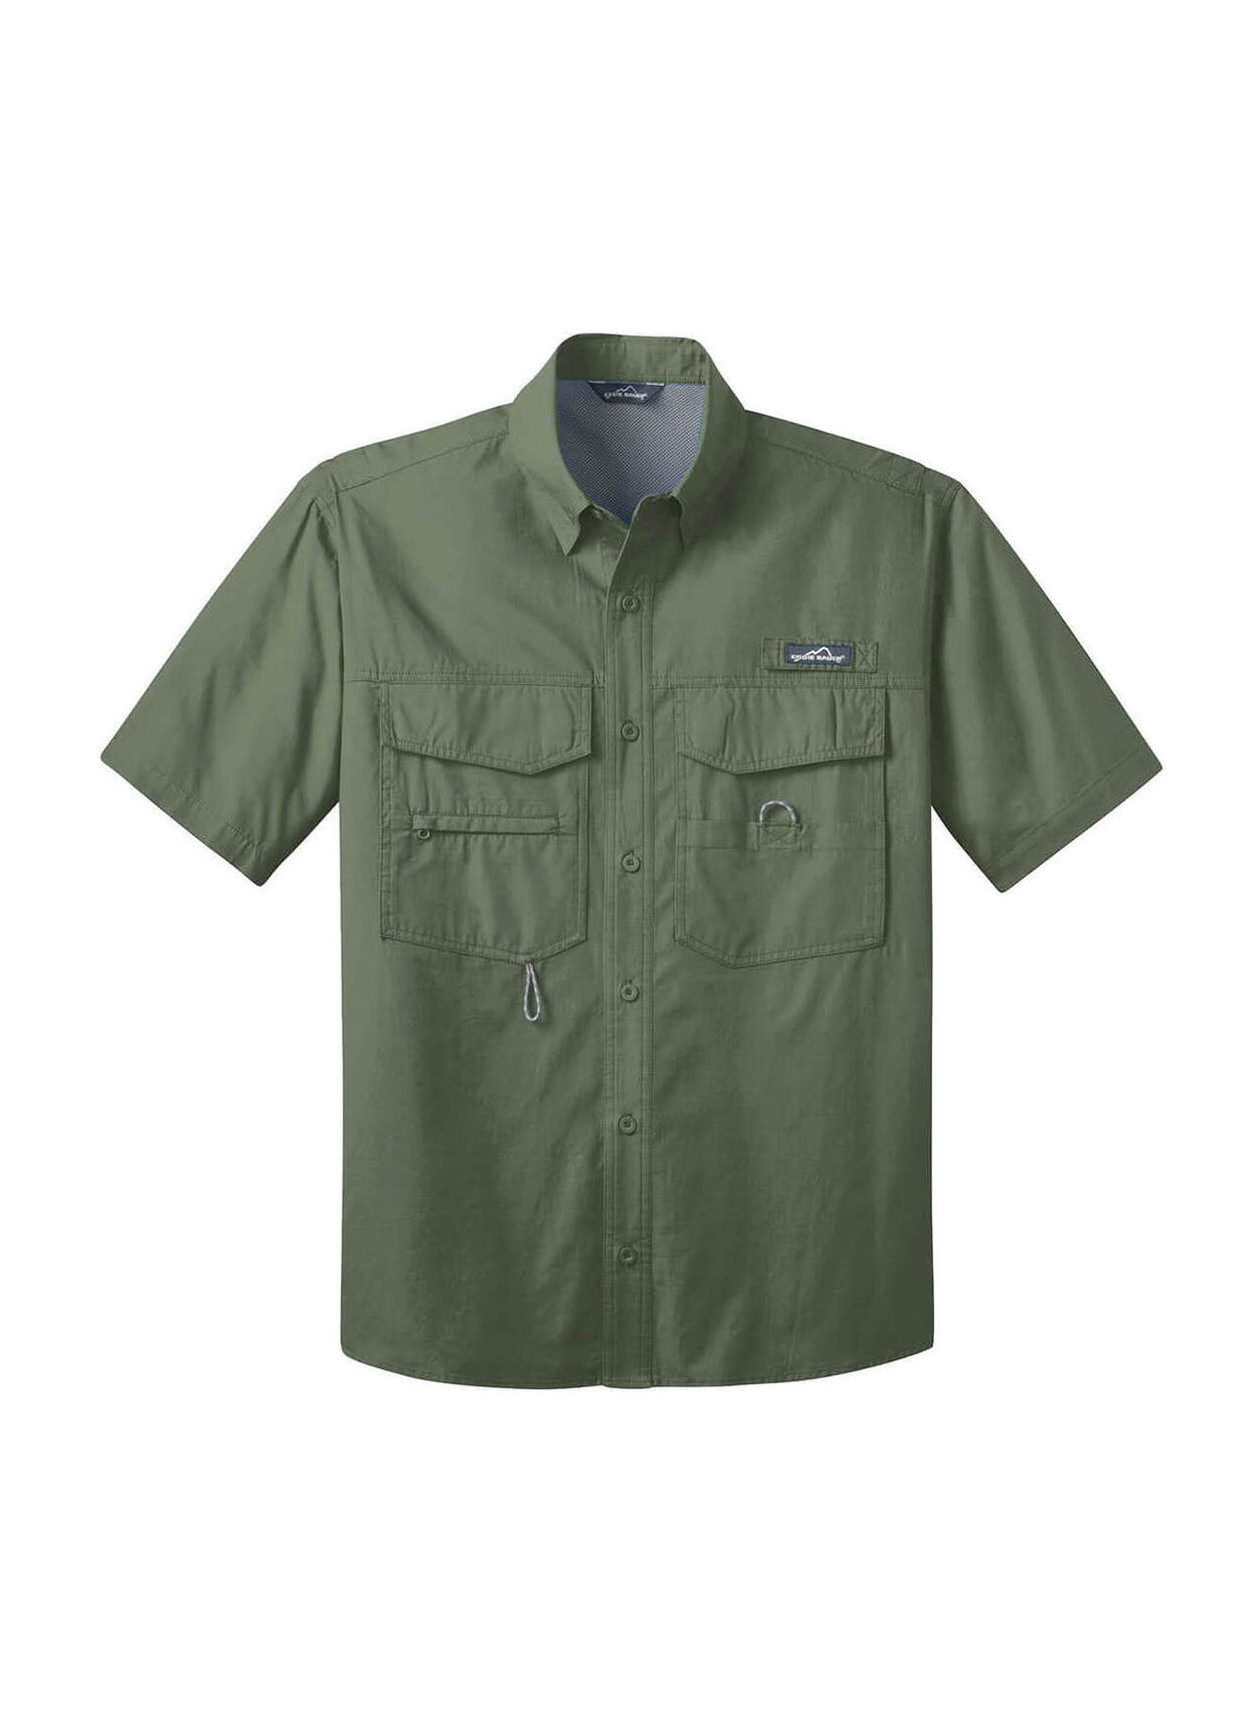 Eddie Bauer Men's Seagrass Green Short-Sleeve Fishing Shirt